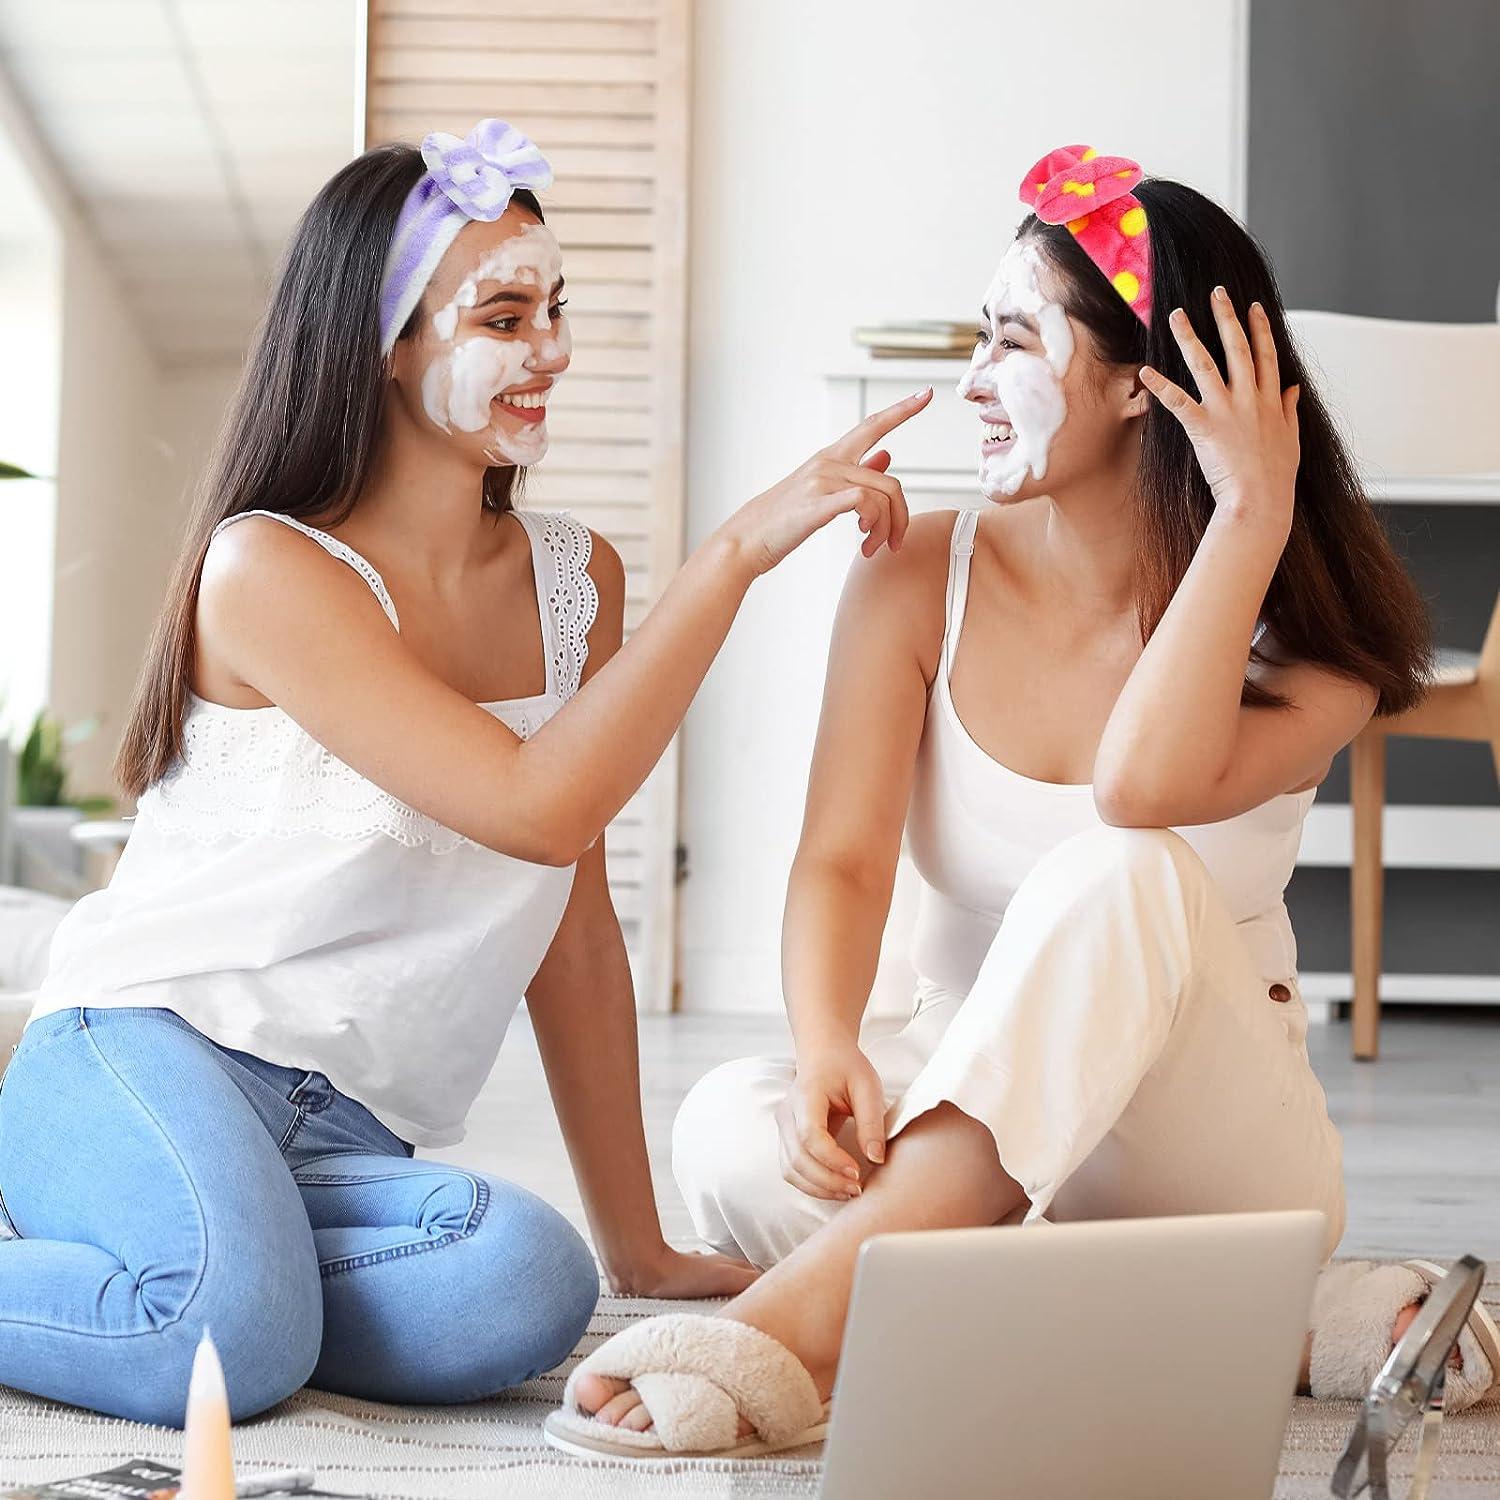 Girls Women Fluffy Terry Towel Facial Make up Bow Fur Bath